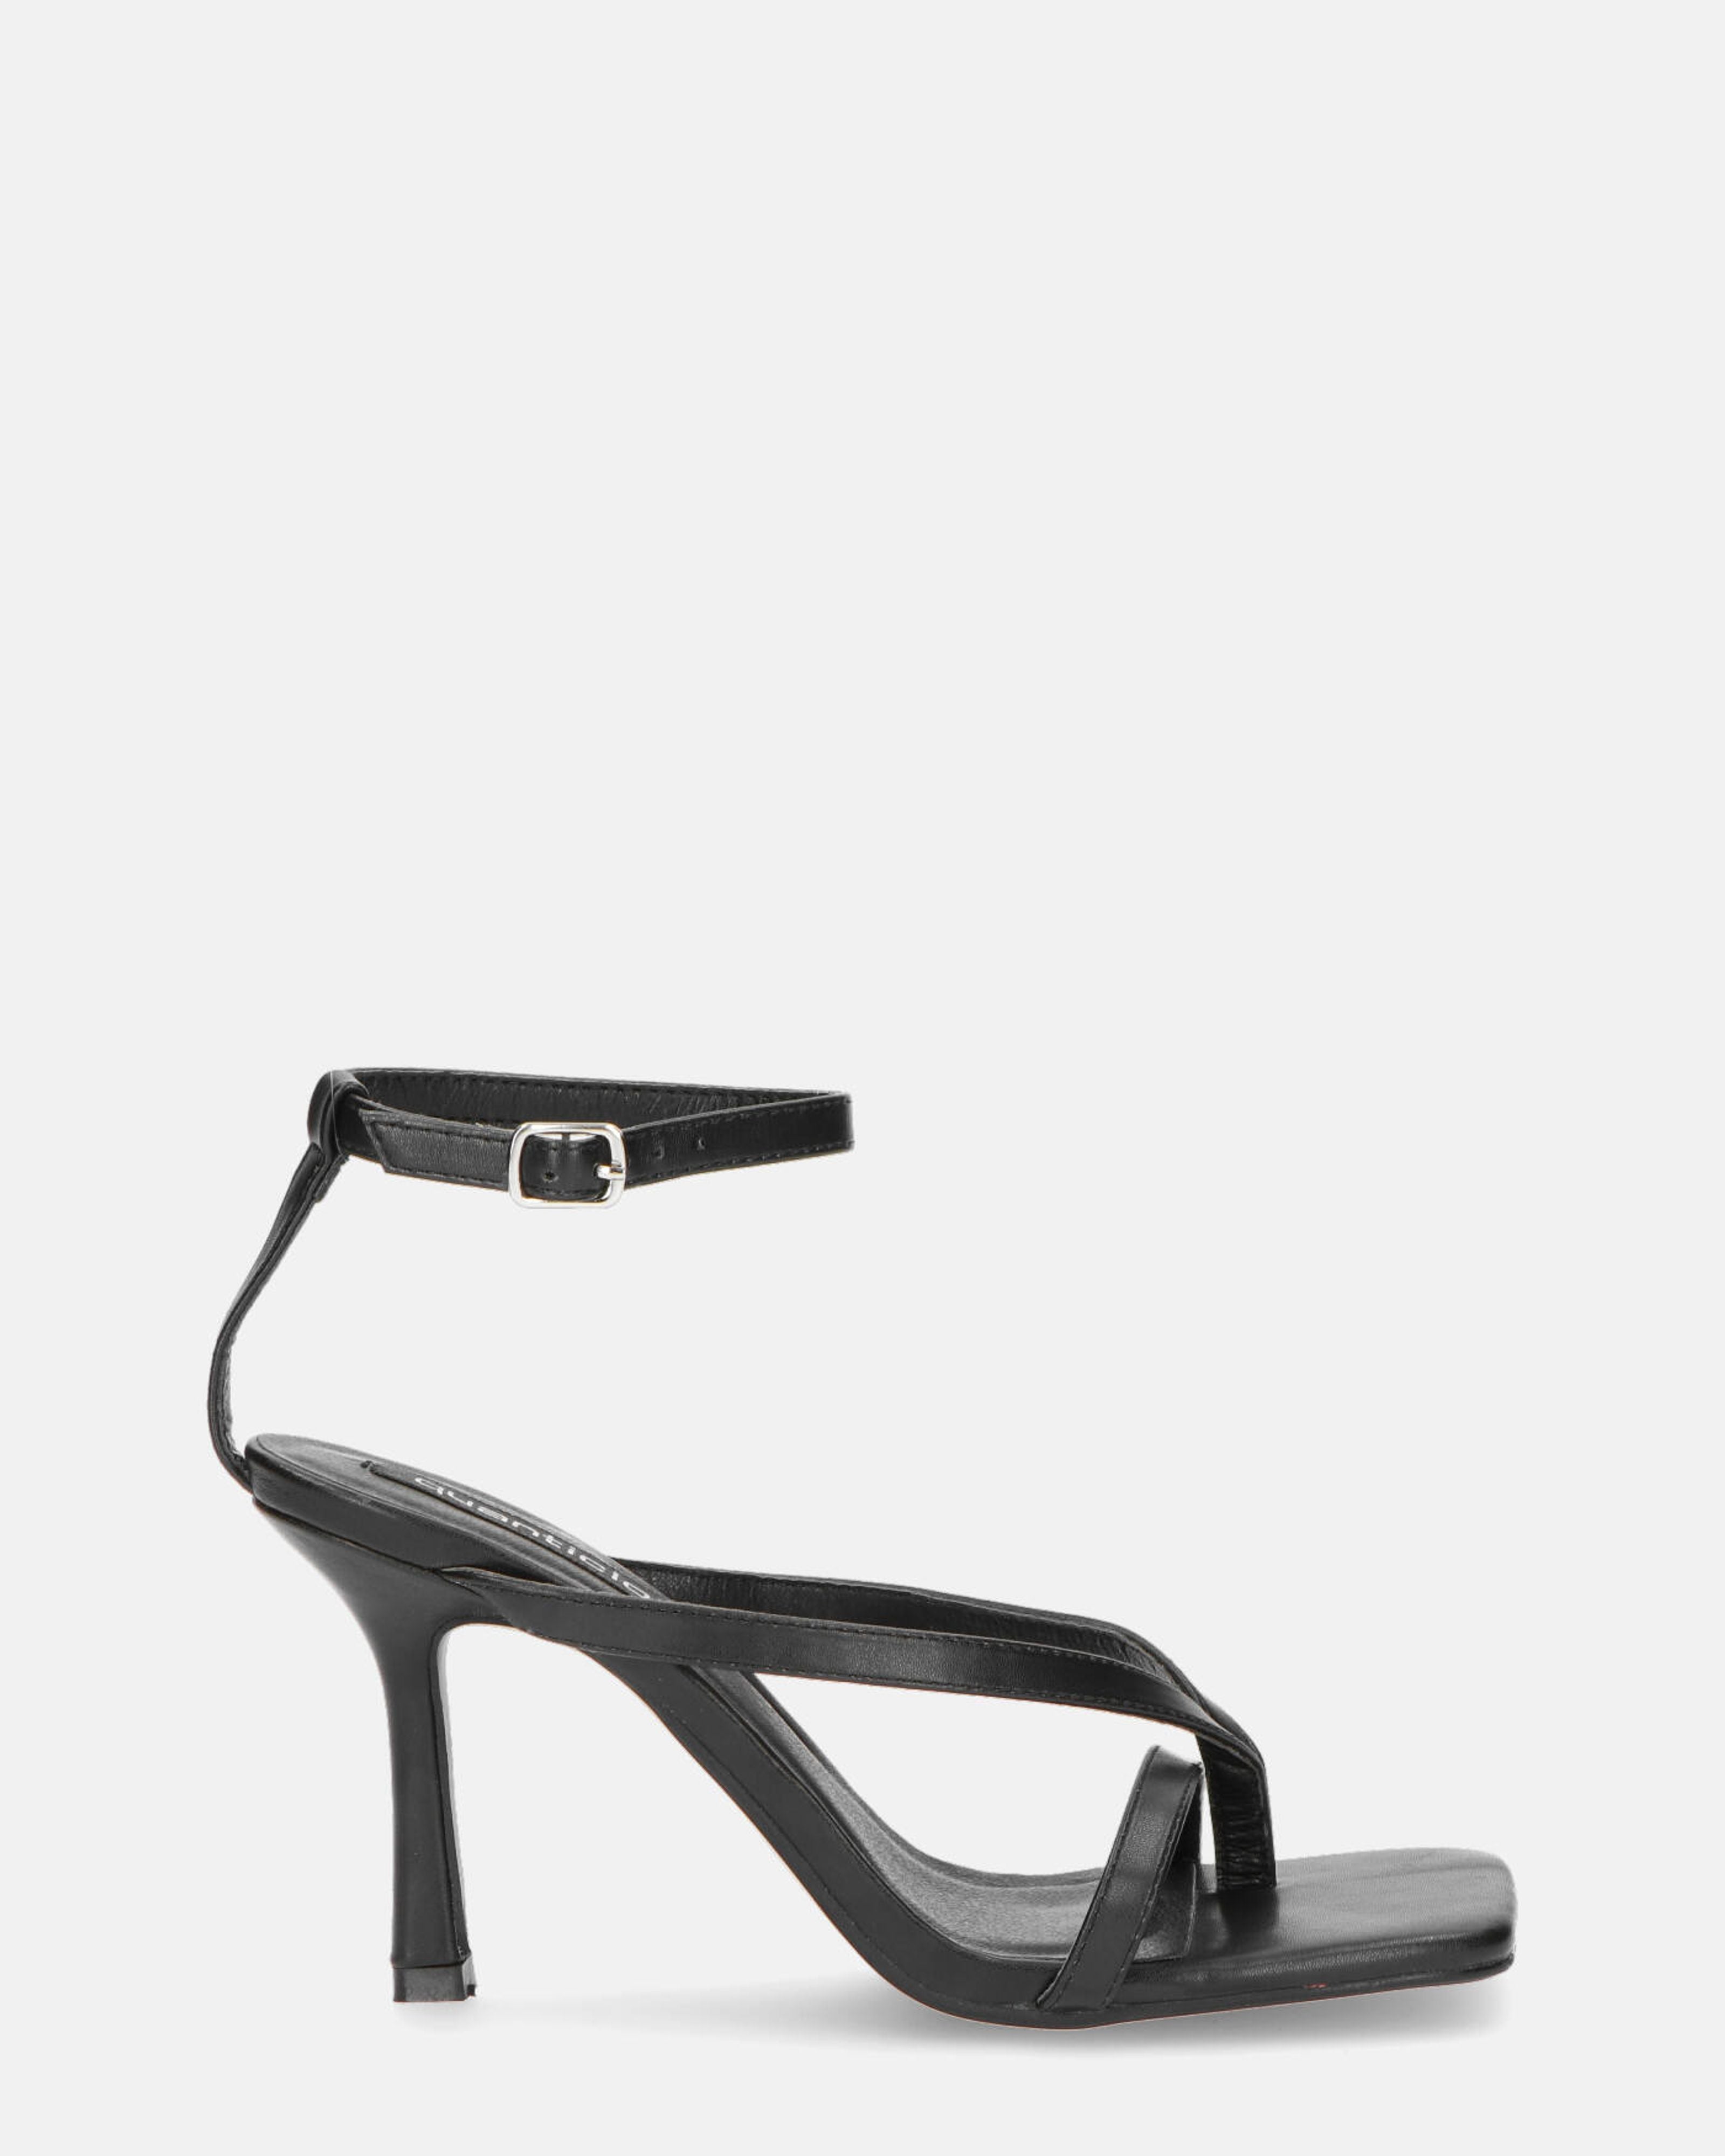 ADELE - thong sandal with black heel